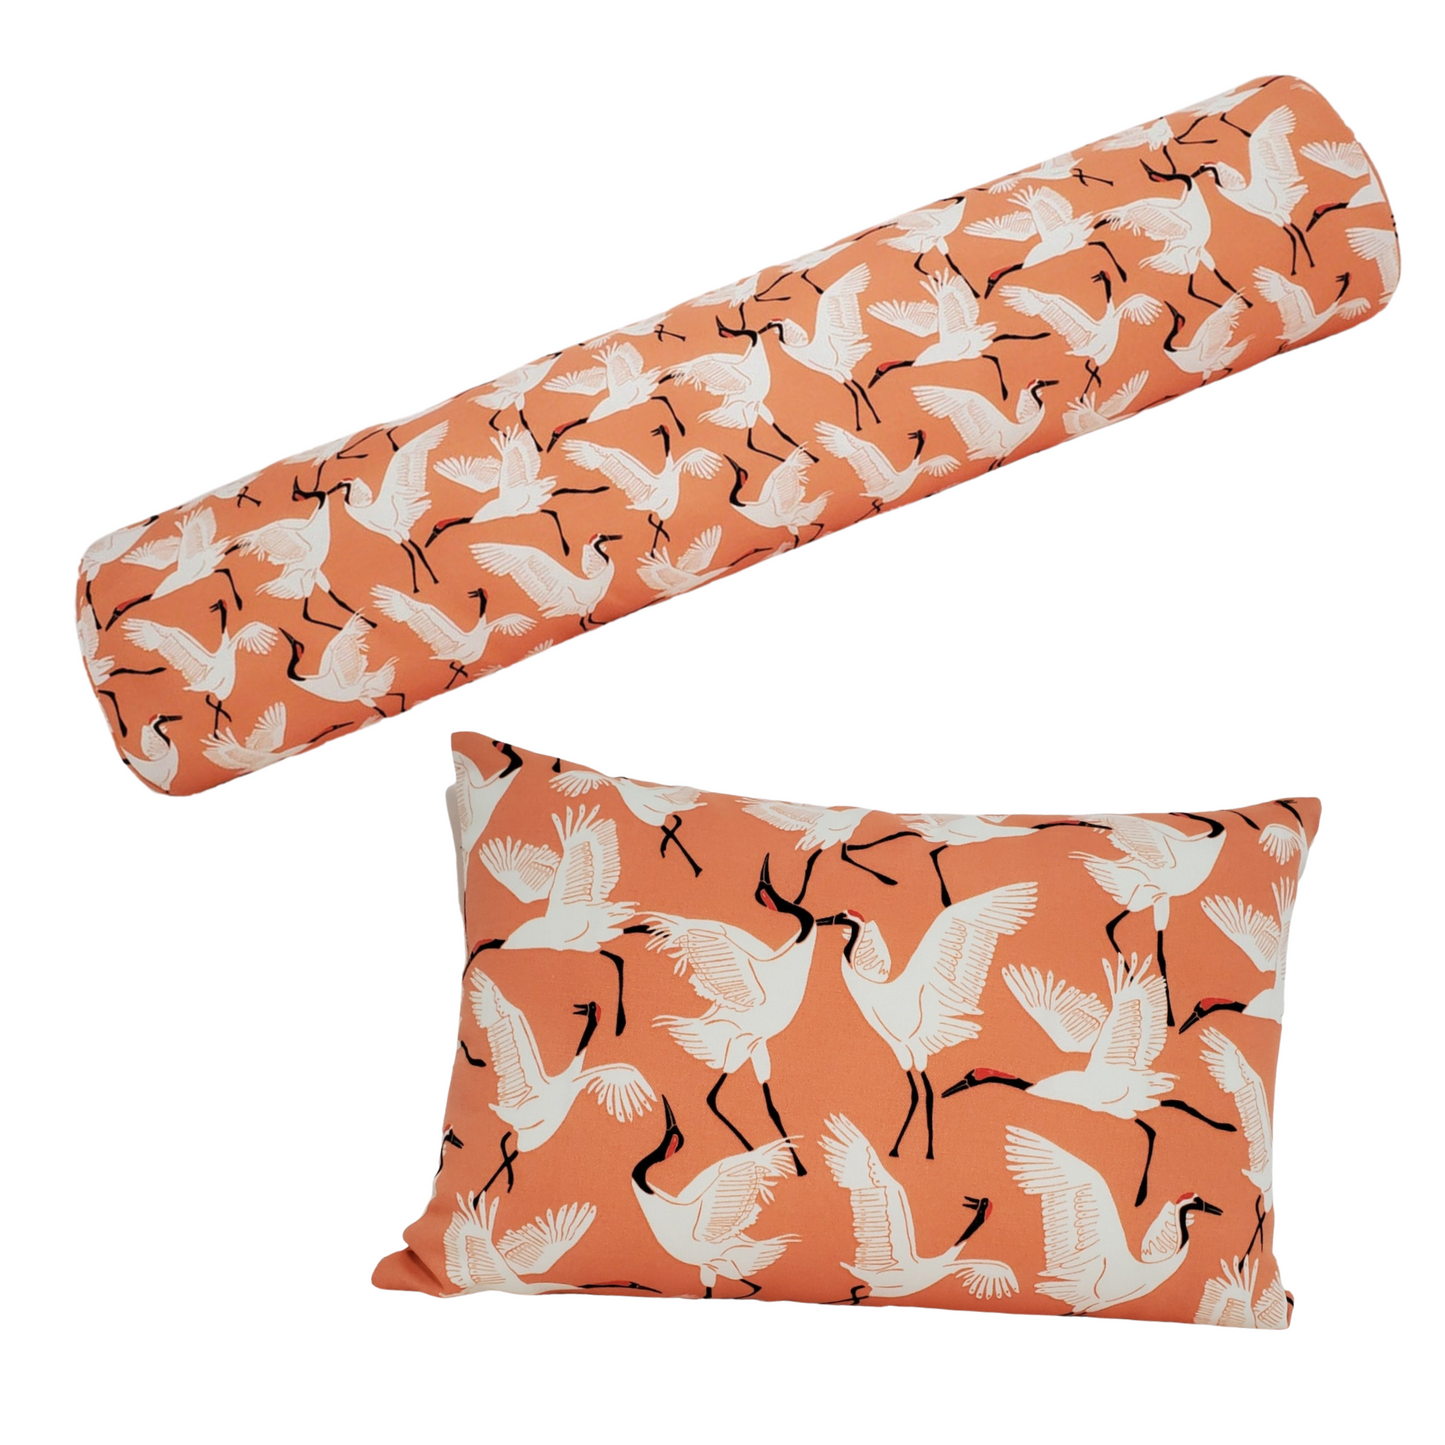 Novogratz Block Cranes Pillow Cover in Cobalt - OEKO TEX Sustainable / Available in Throw, Lumbar, Bolster Pillow Covers